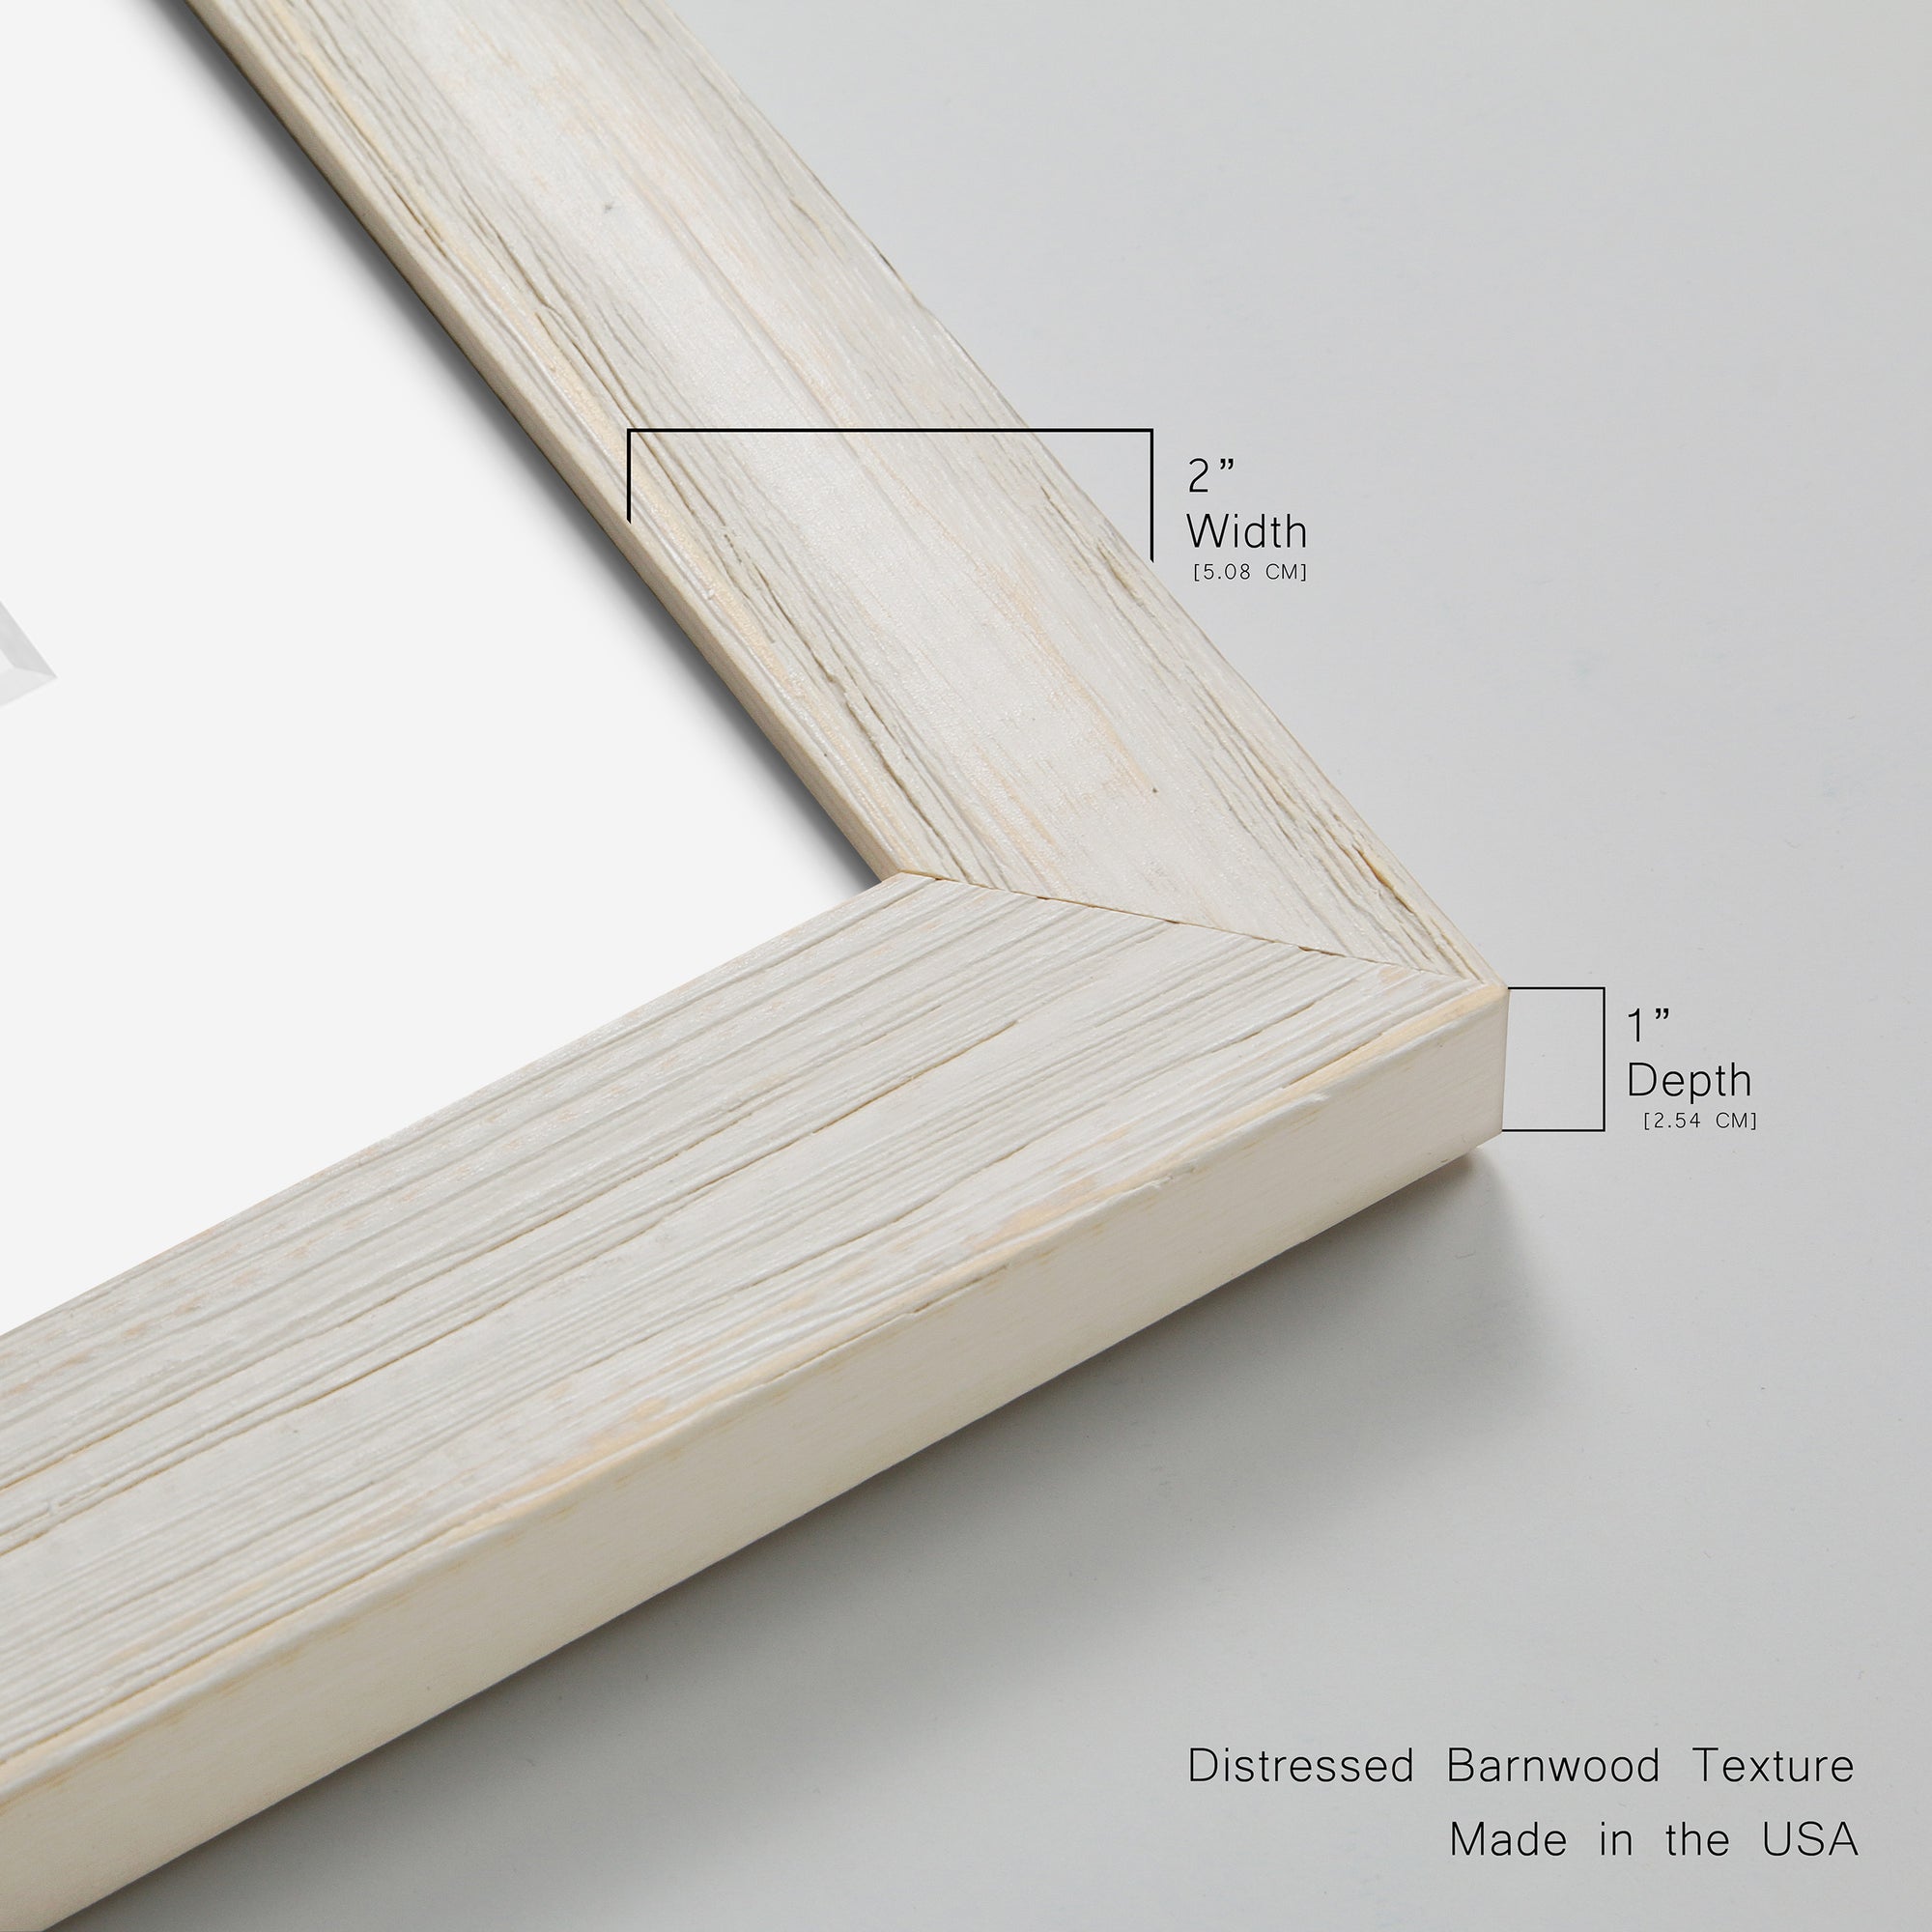 Tropical Foliage II - Premium Framed Print - Distressed Barnwood Frame - Ready to Hang